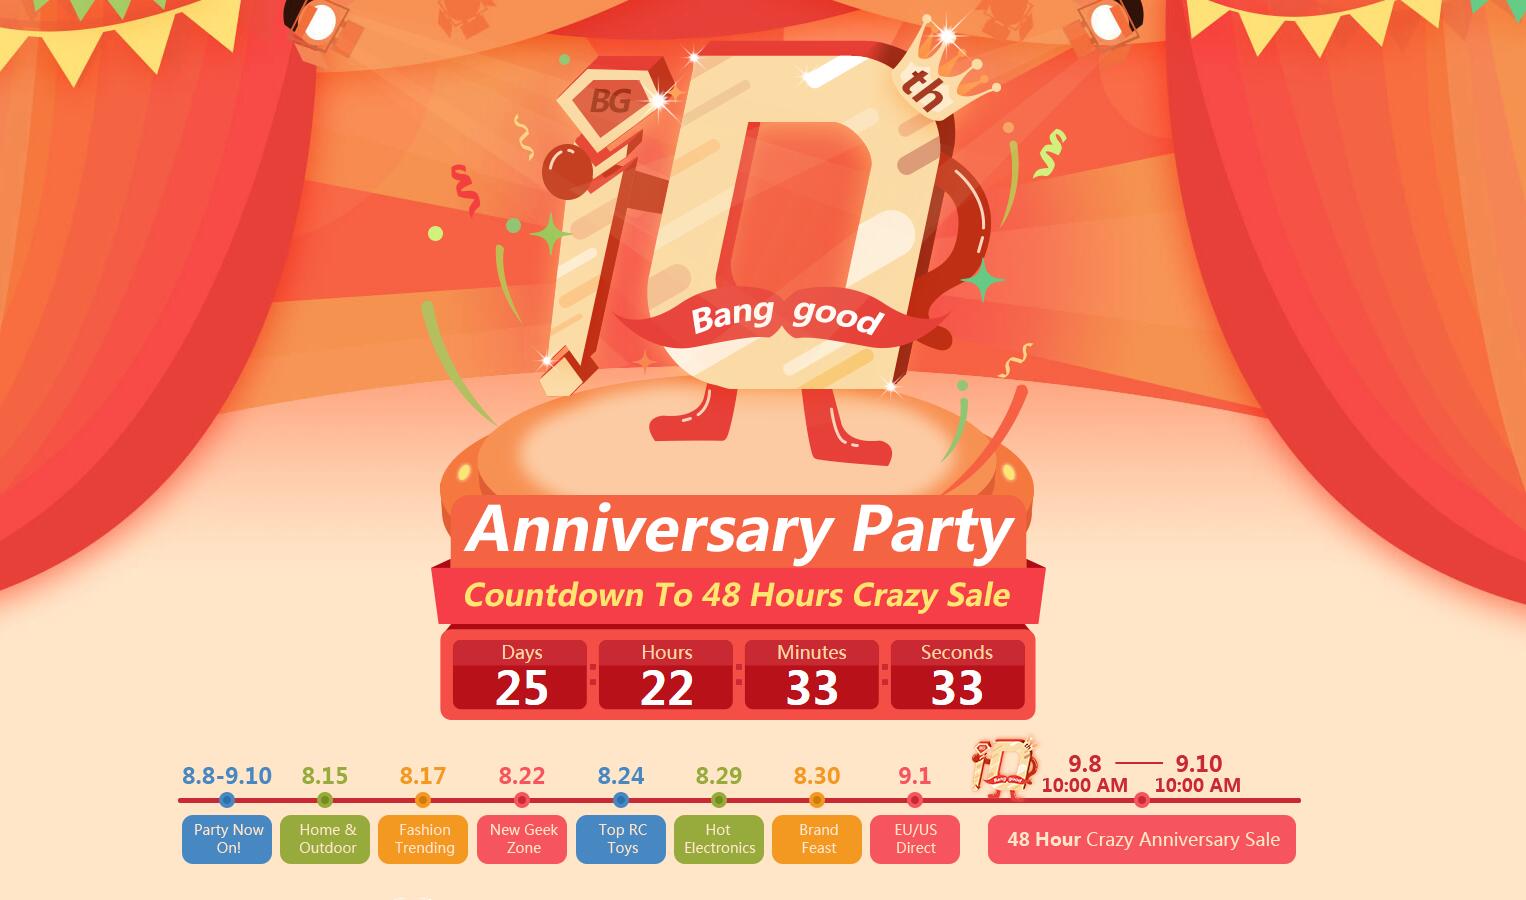 10 Anniversary Party - Banggood 10 Anniversary Party 10 Epic Surprises For Banggood Fans